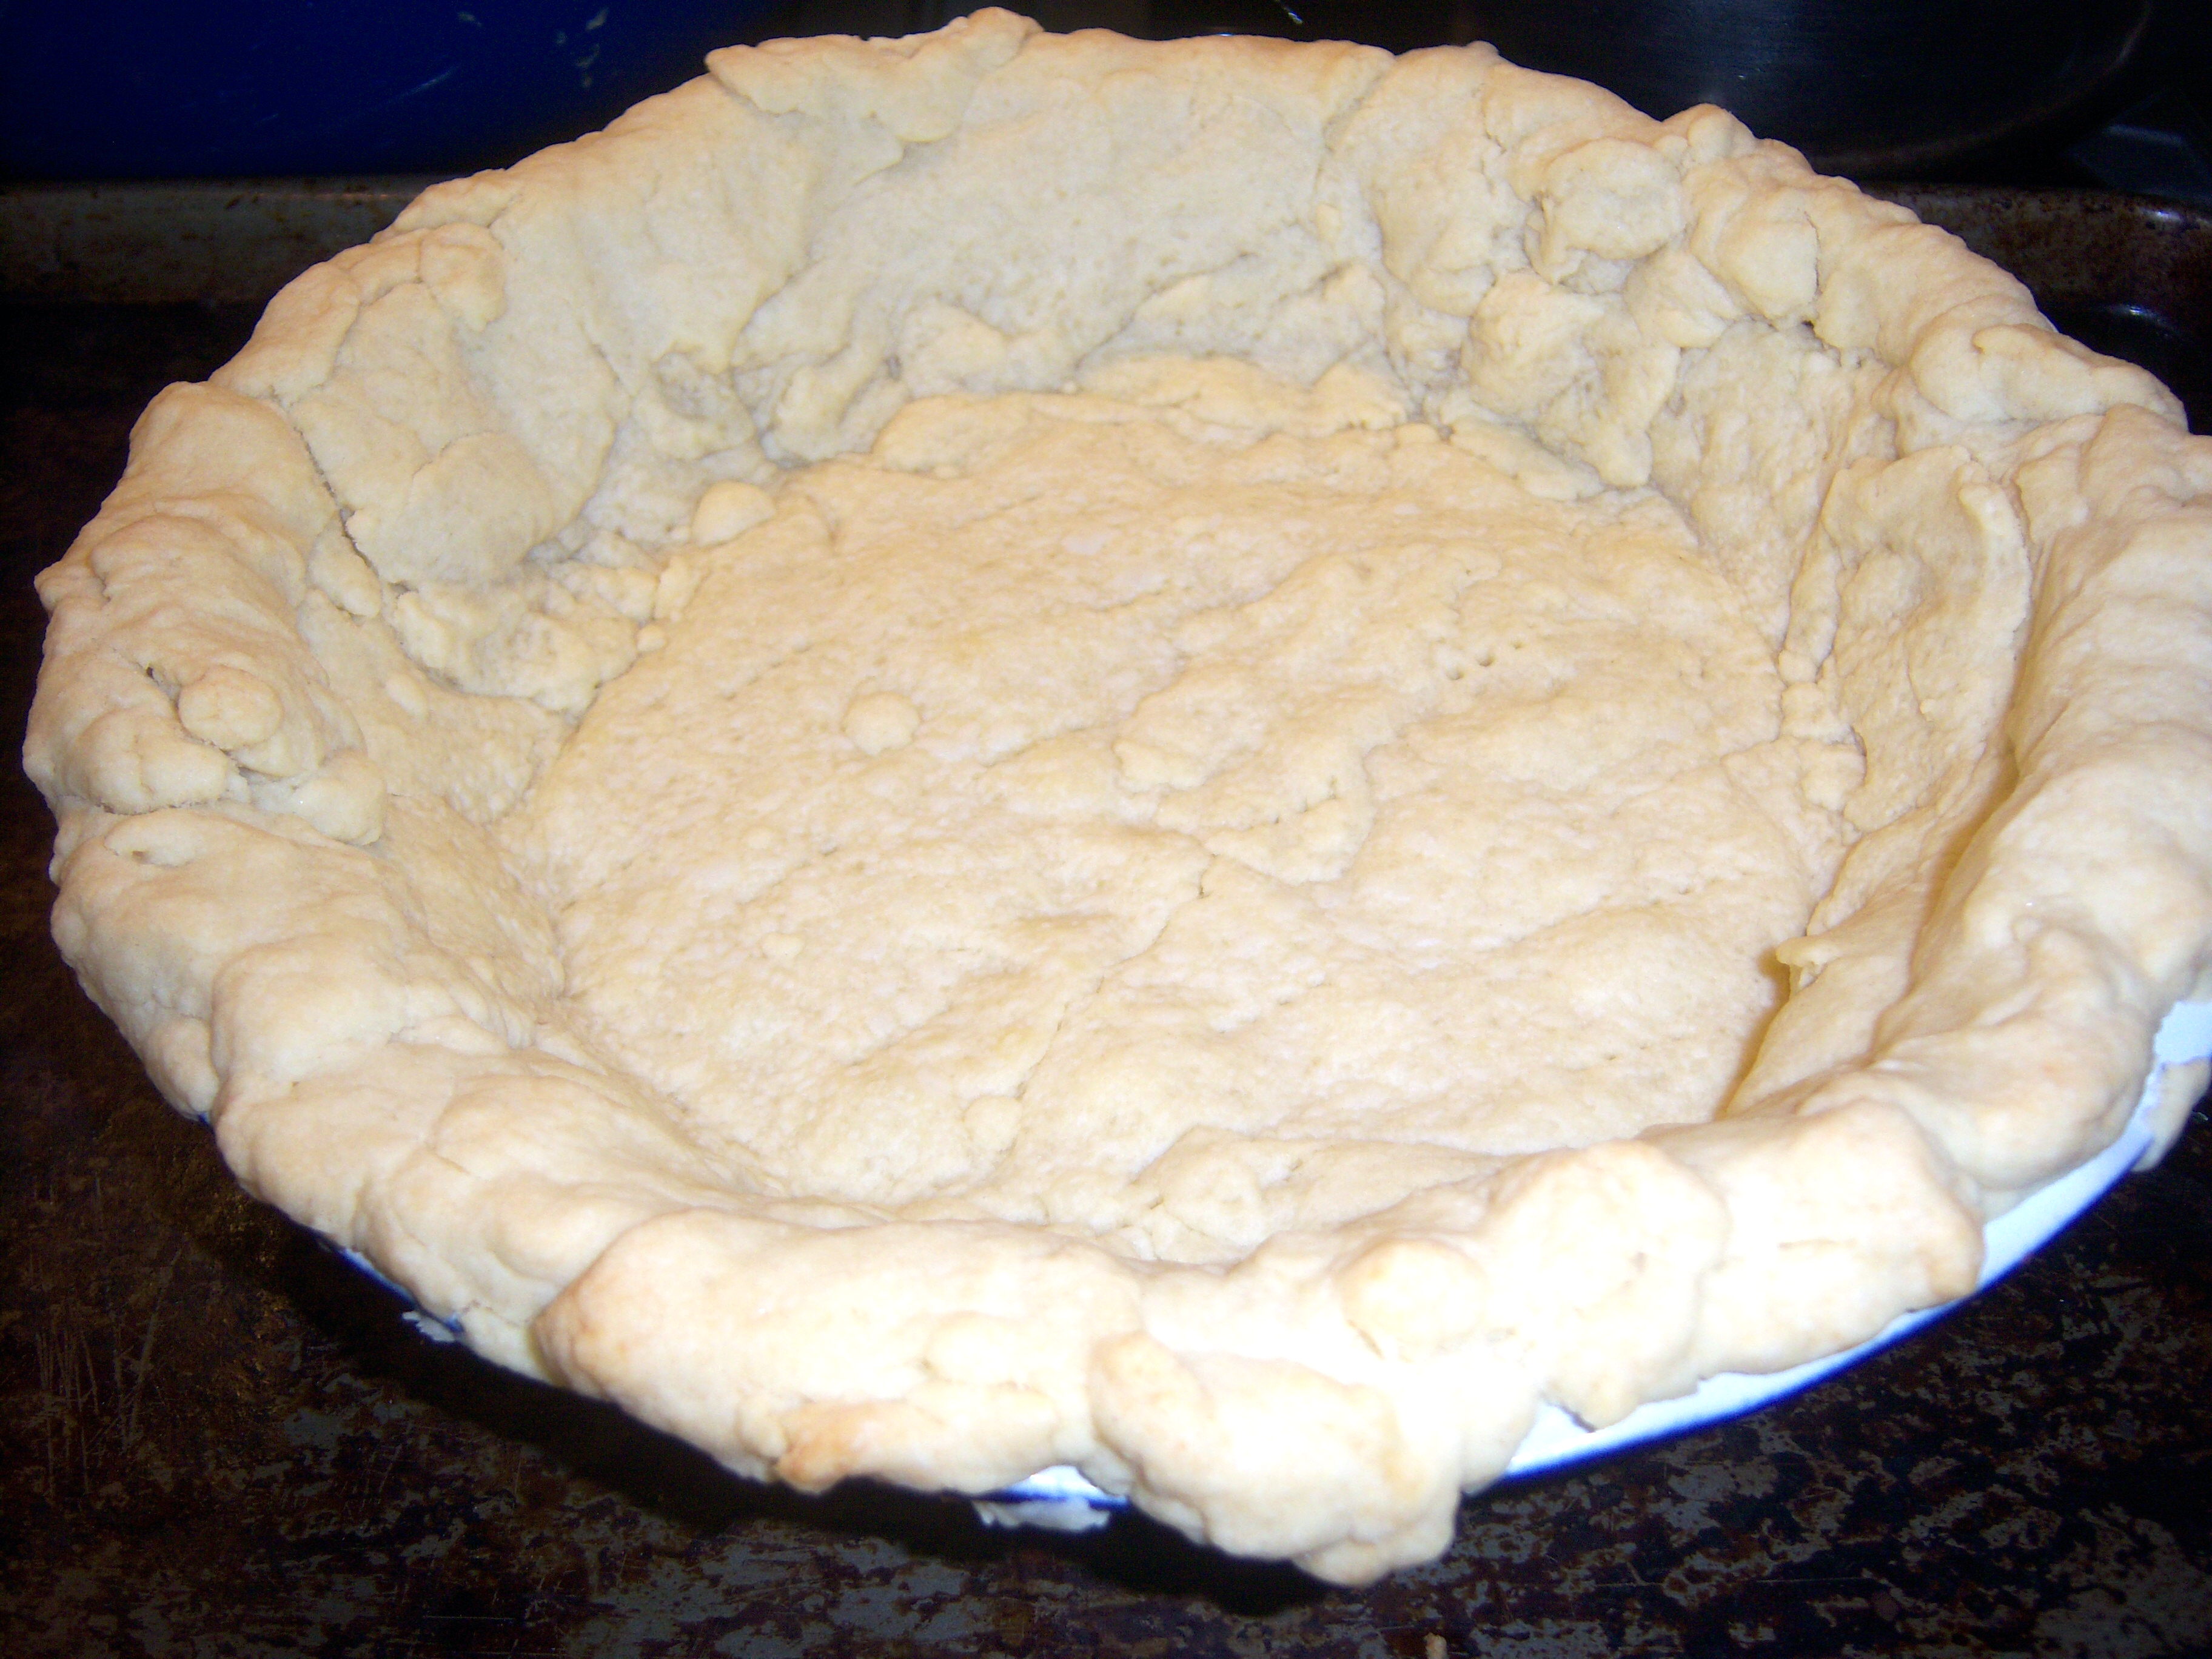 Martha's crust baked